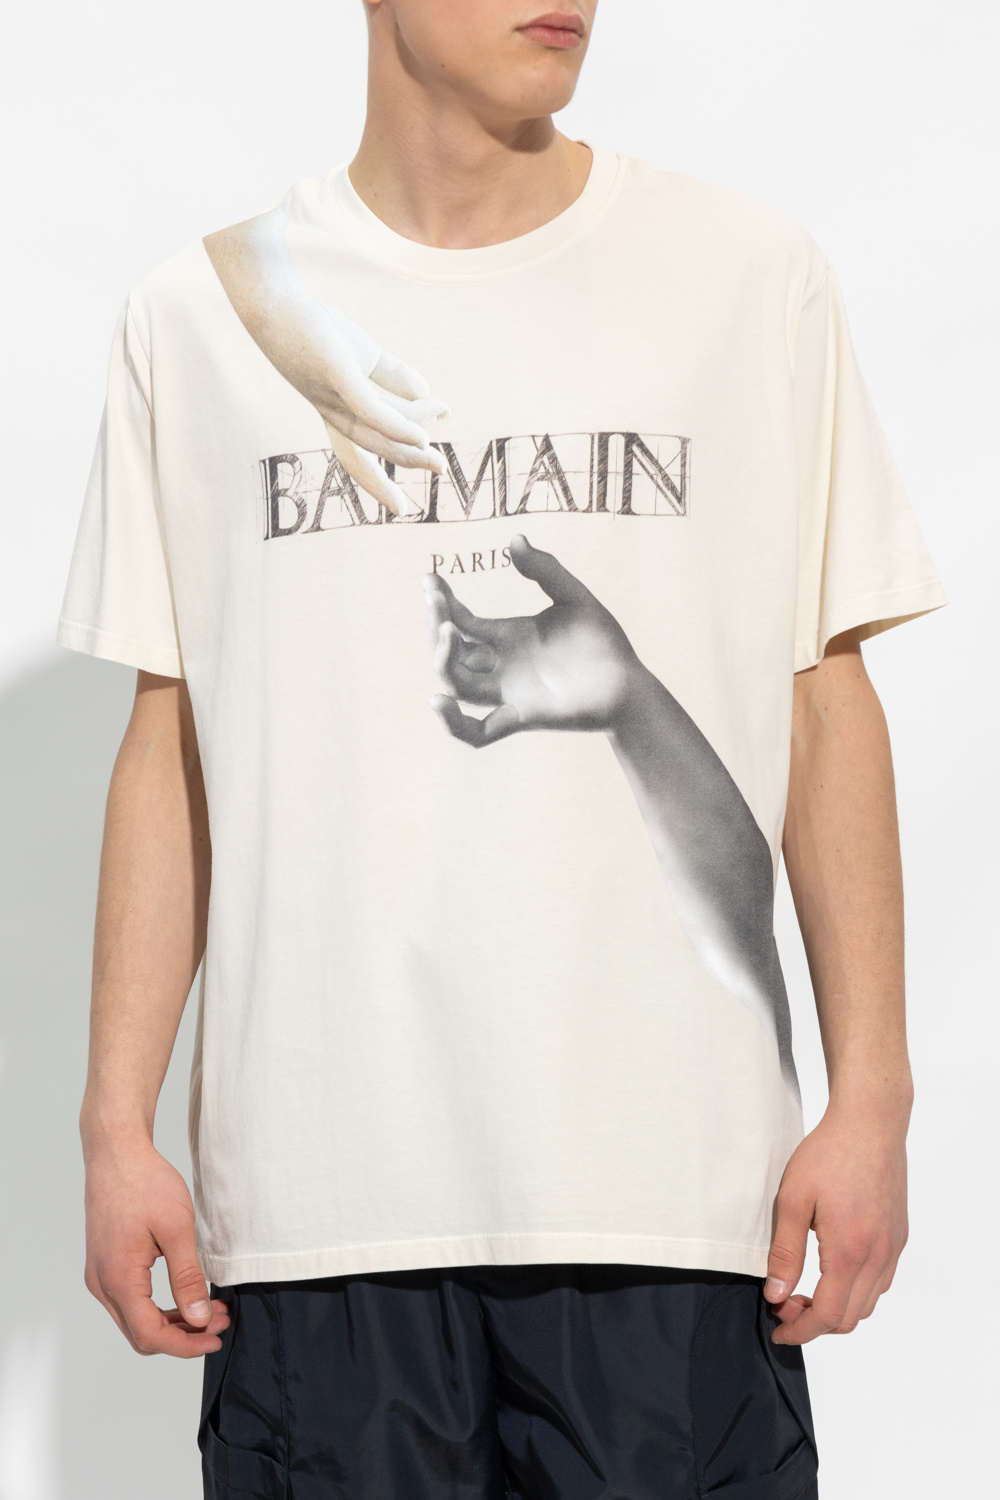 balmain blazer-style Printed T-shirt